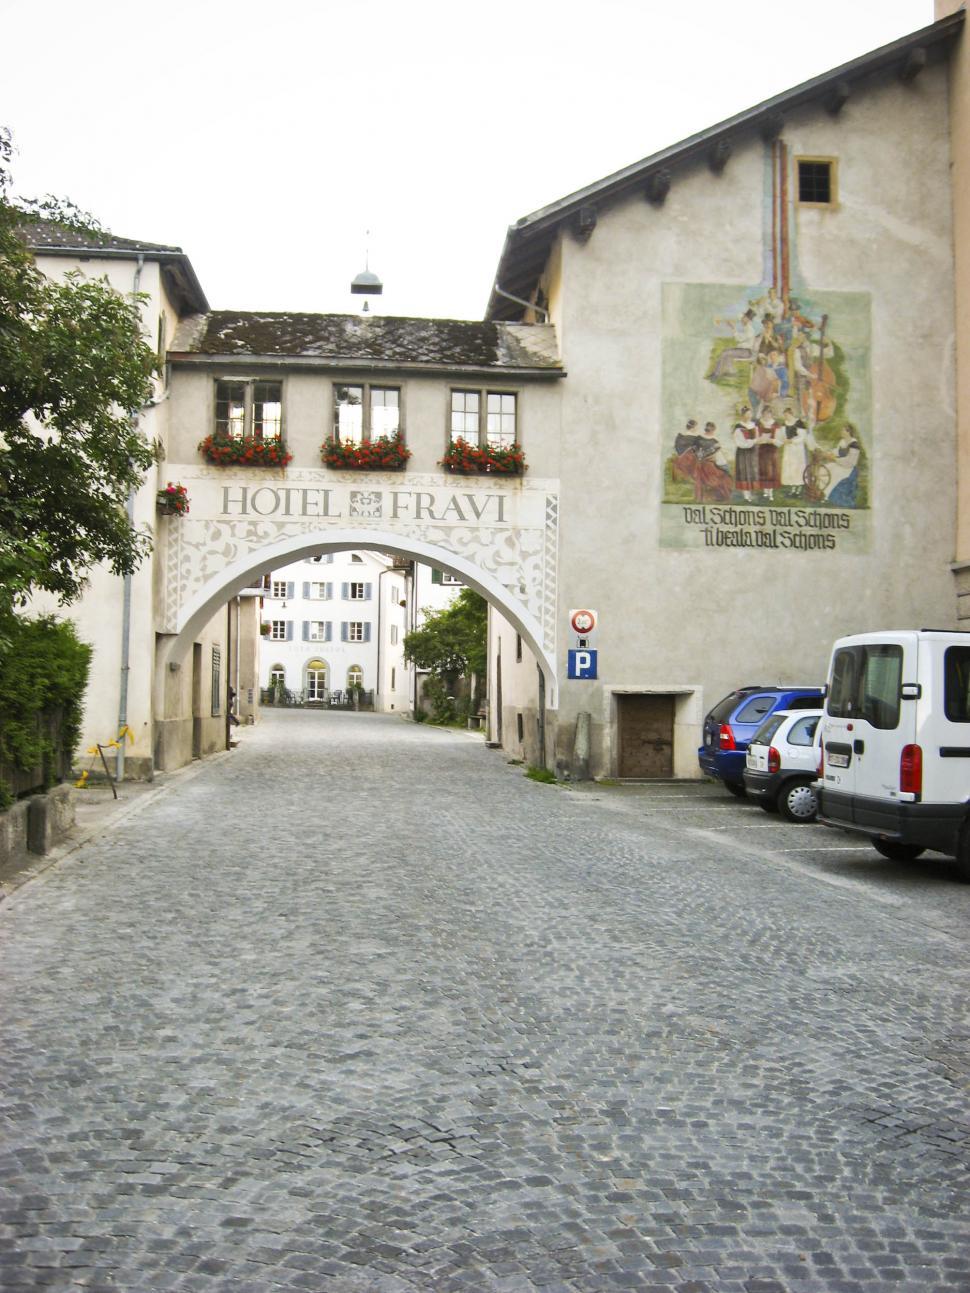 Free Image of Hotel in Switzerland 